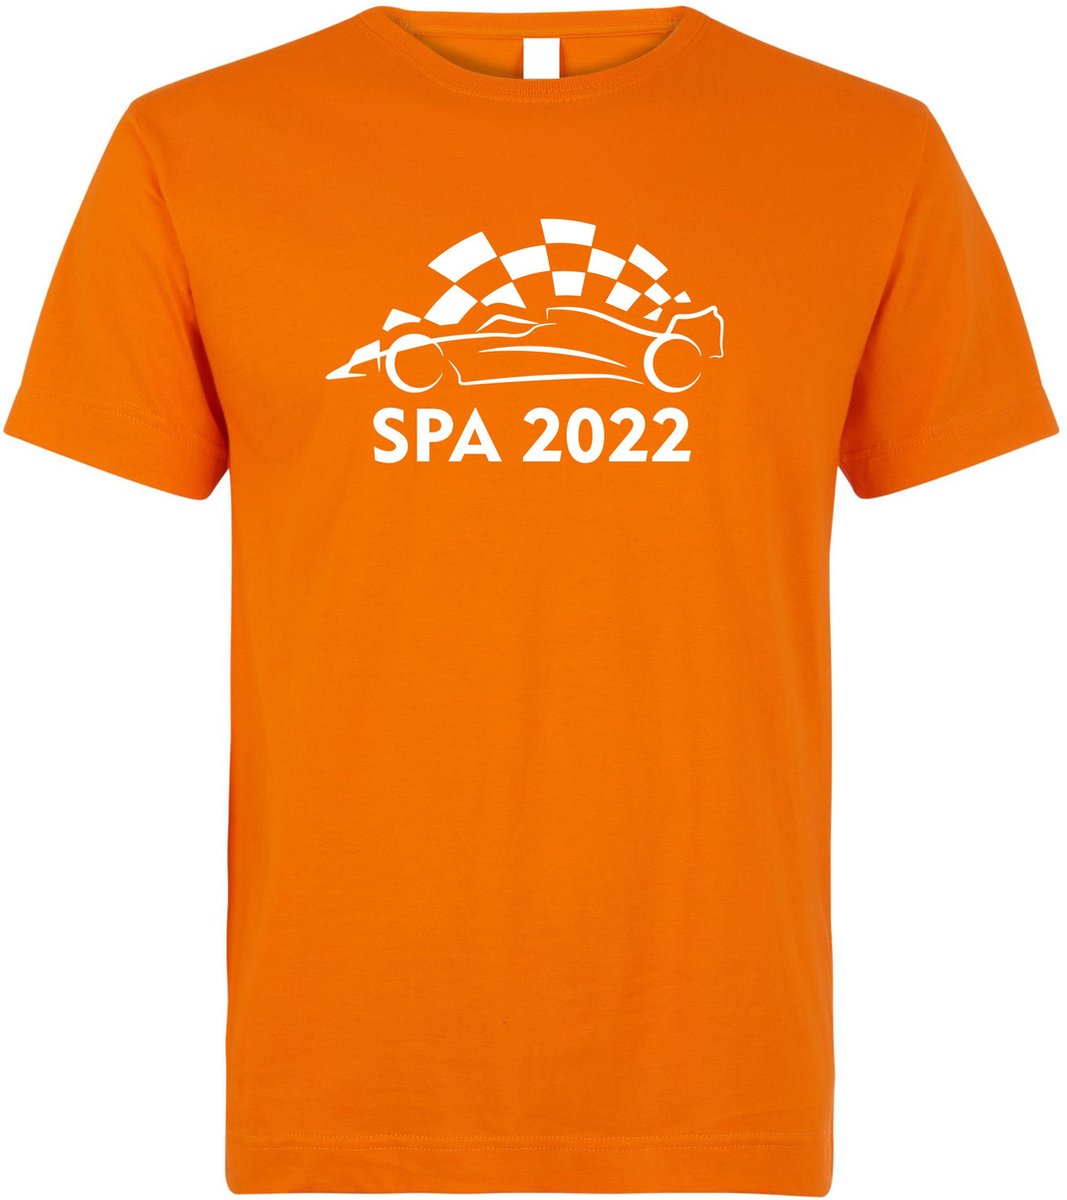 T-shirt kinderen Spa 2022 met raceauto | Max Verstappen / Red Bull Racing / Formule 1 fan | Grand Prix Circuit Spa-Francorchamps | kleding shirt | Oranje | maat 104